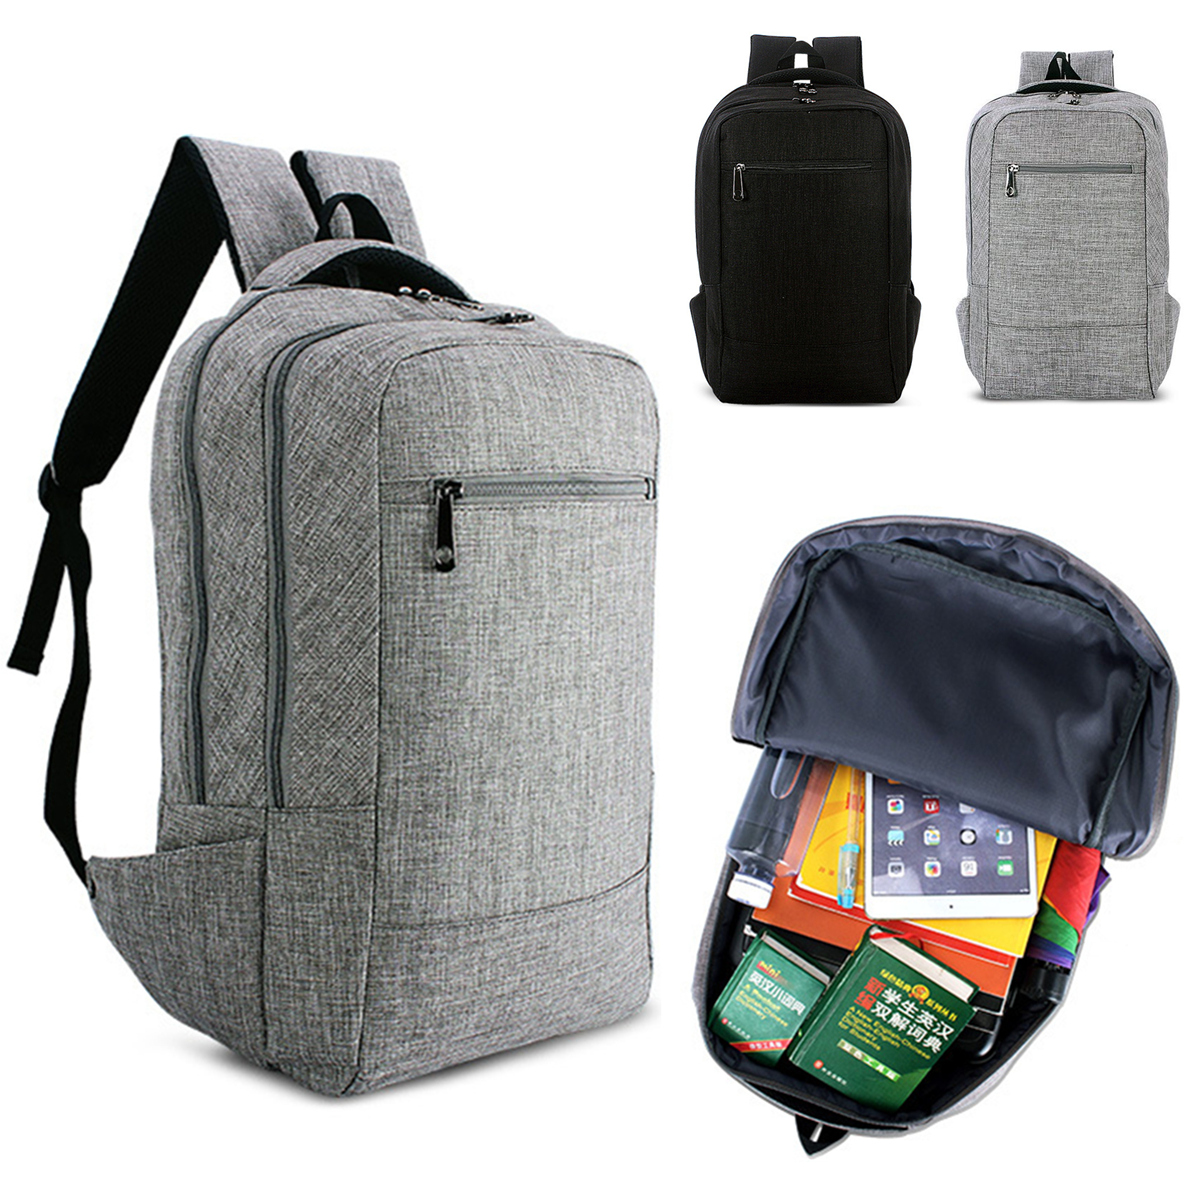 IPReereg-156inch-Men-Laptop-Canvas-Backpack-School-Business-Travel-Shoulder-Bag-Rucksack-1193578-1